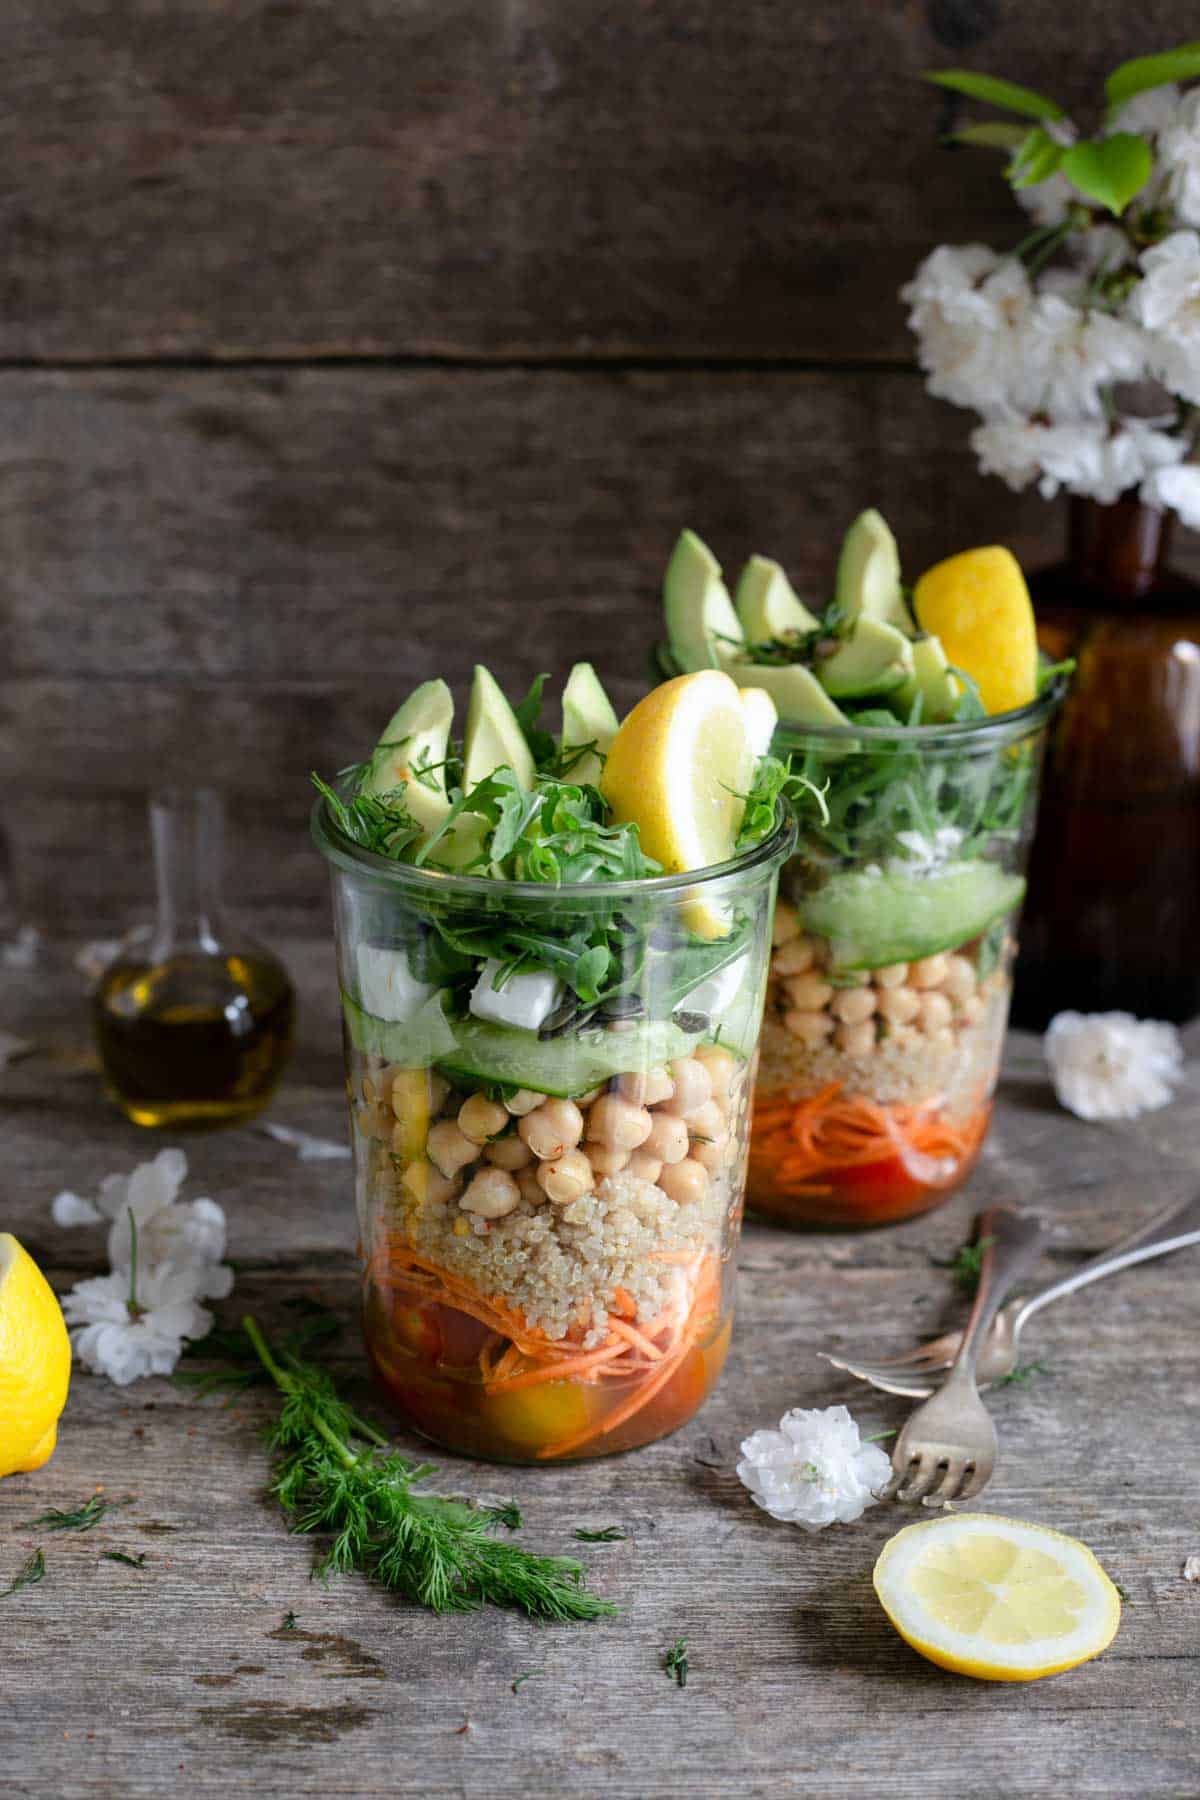 Tomato and quinoa salad jars, fun, healthy and delicious way to prep your meals! #veganrecipe #saladjar #healthyeating | via @annabanana.co